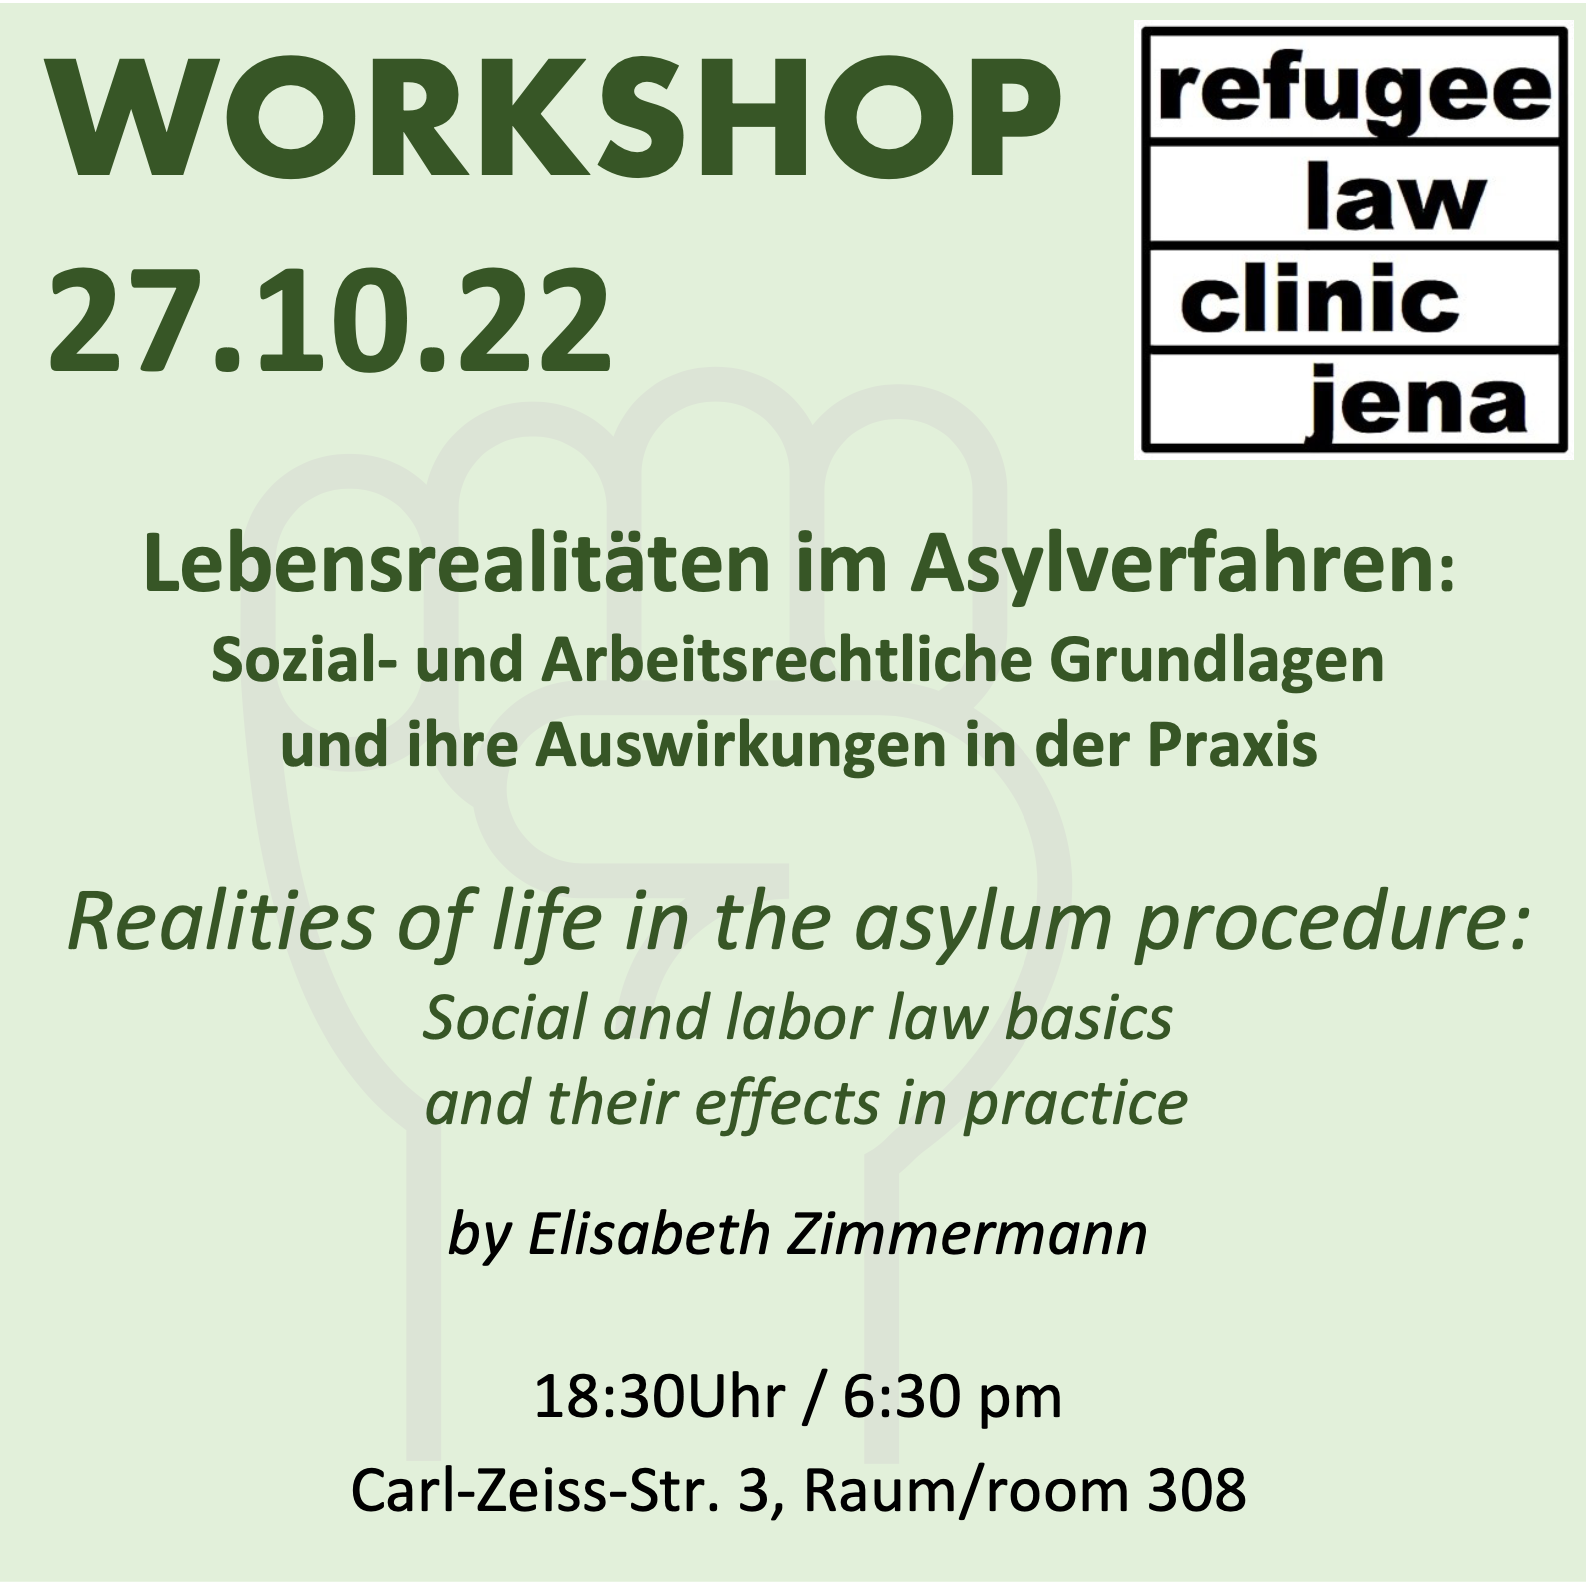 Workshop: Lebensrealitäten im Asylverfahren / Realities of life in the asylum procedure